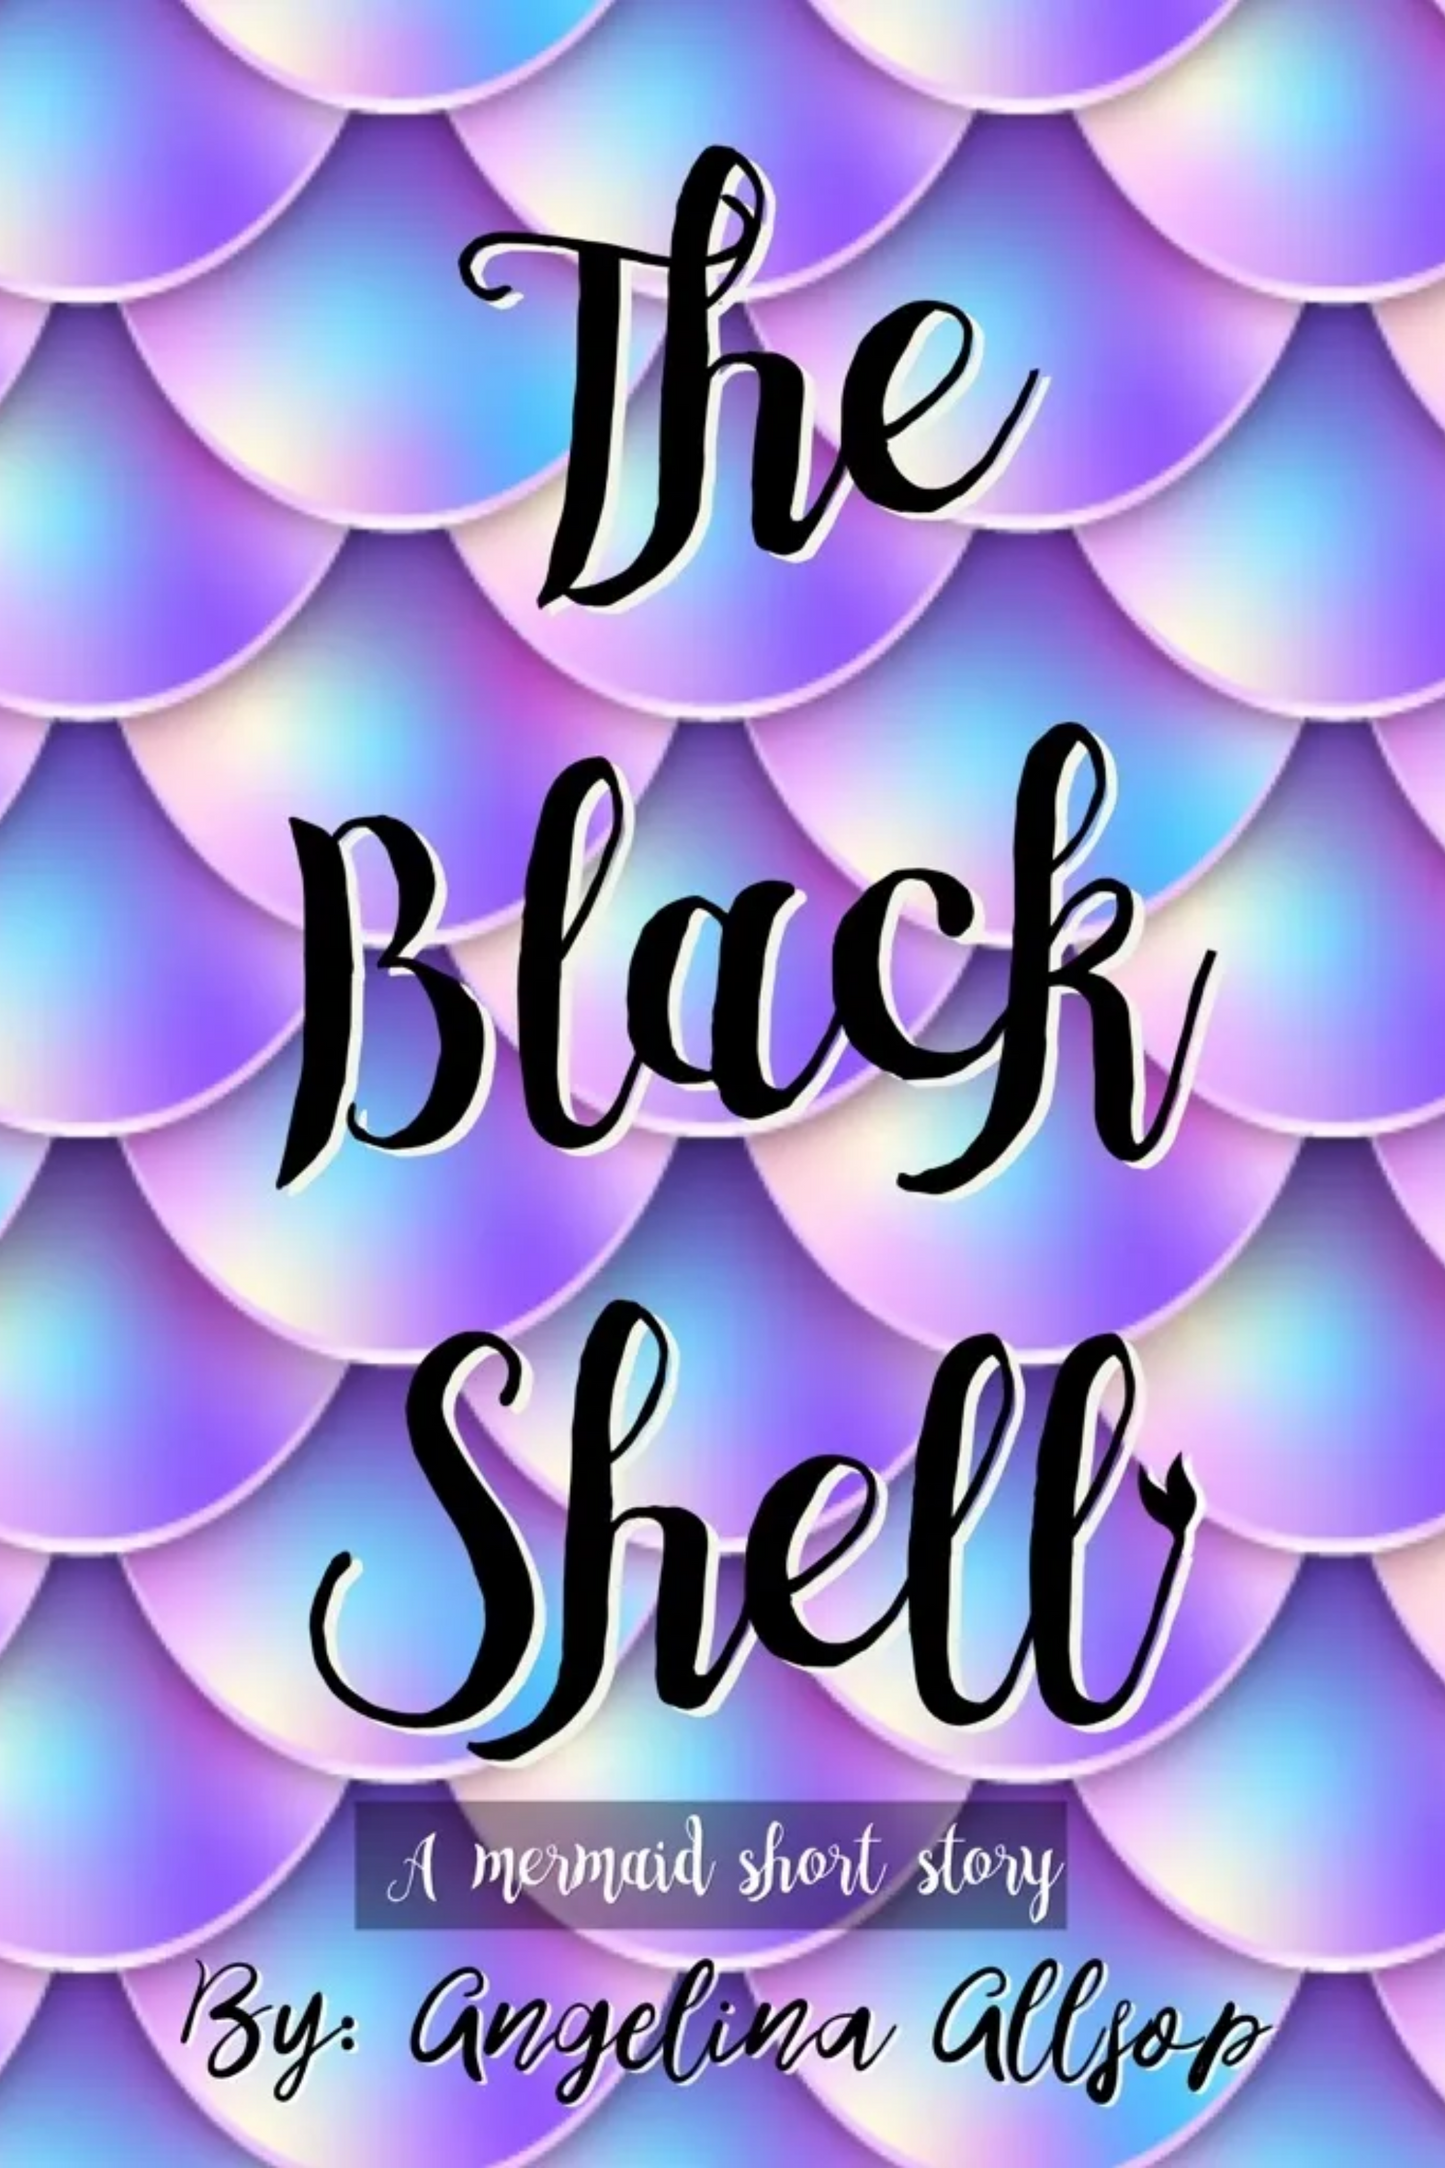 La mini historia de Black Shell